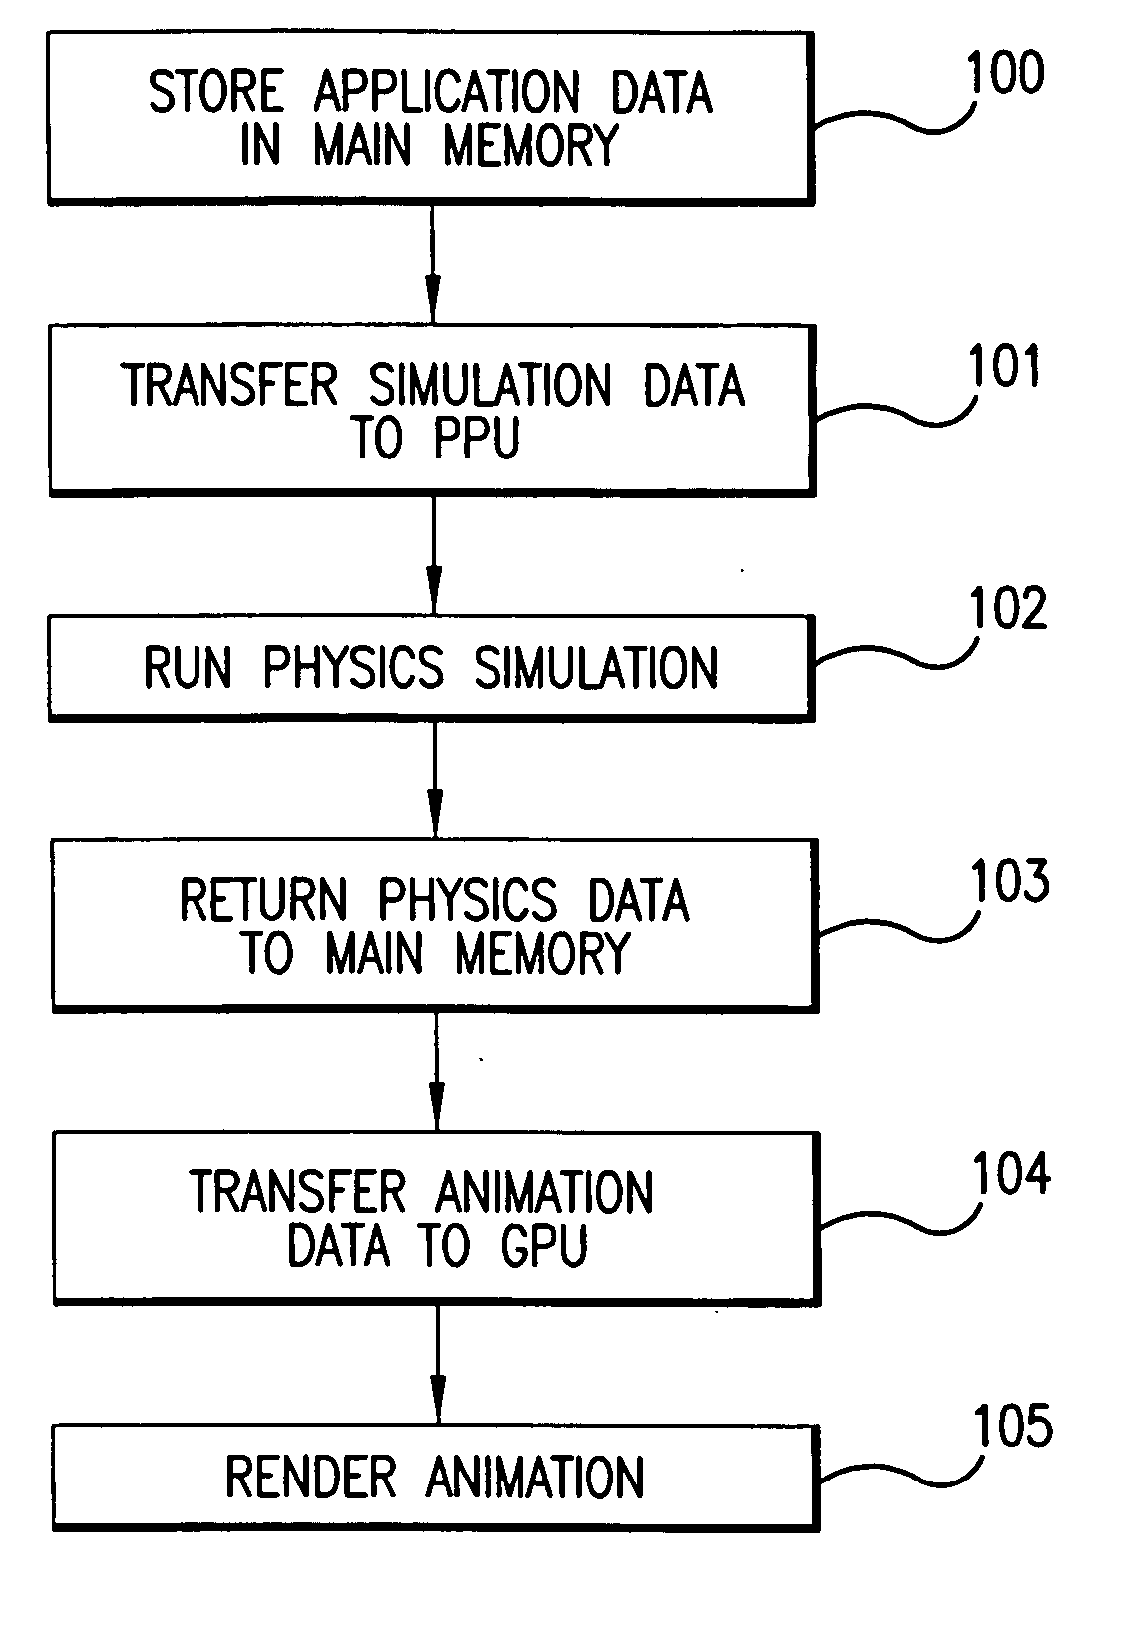 System with PPU/GPU architecture